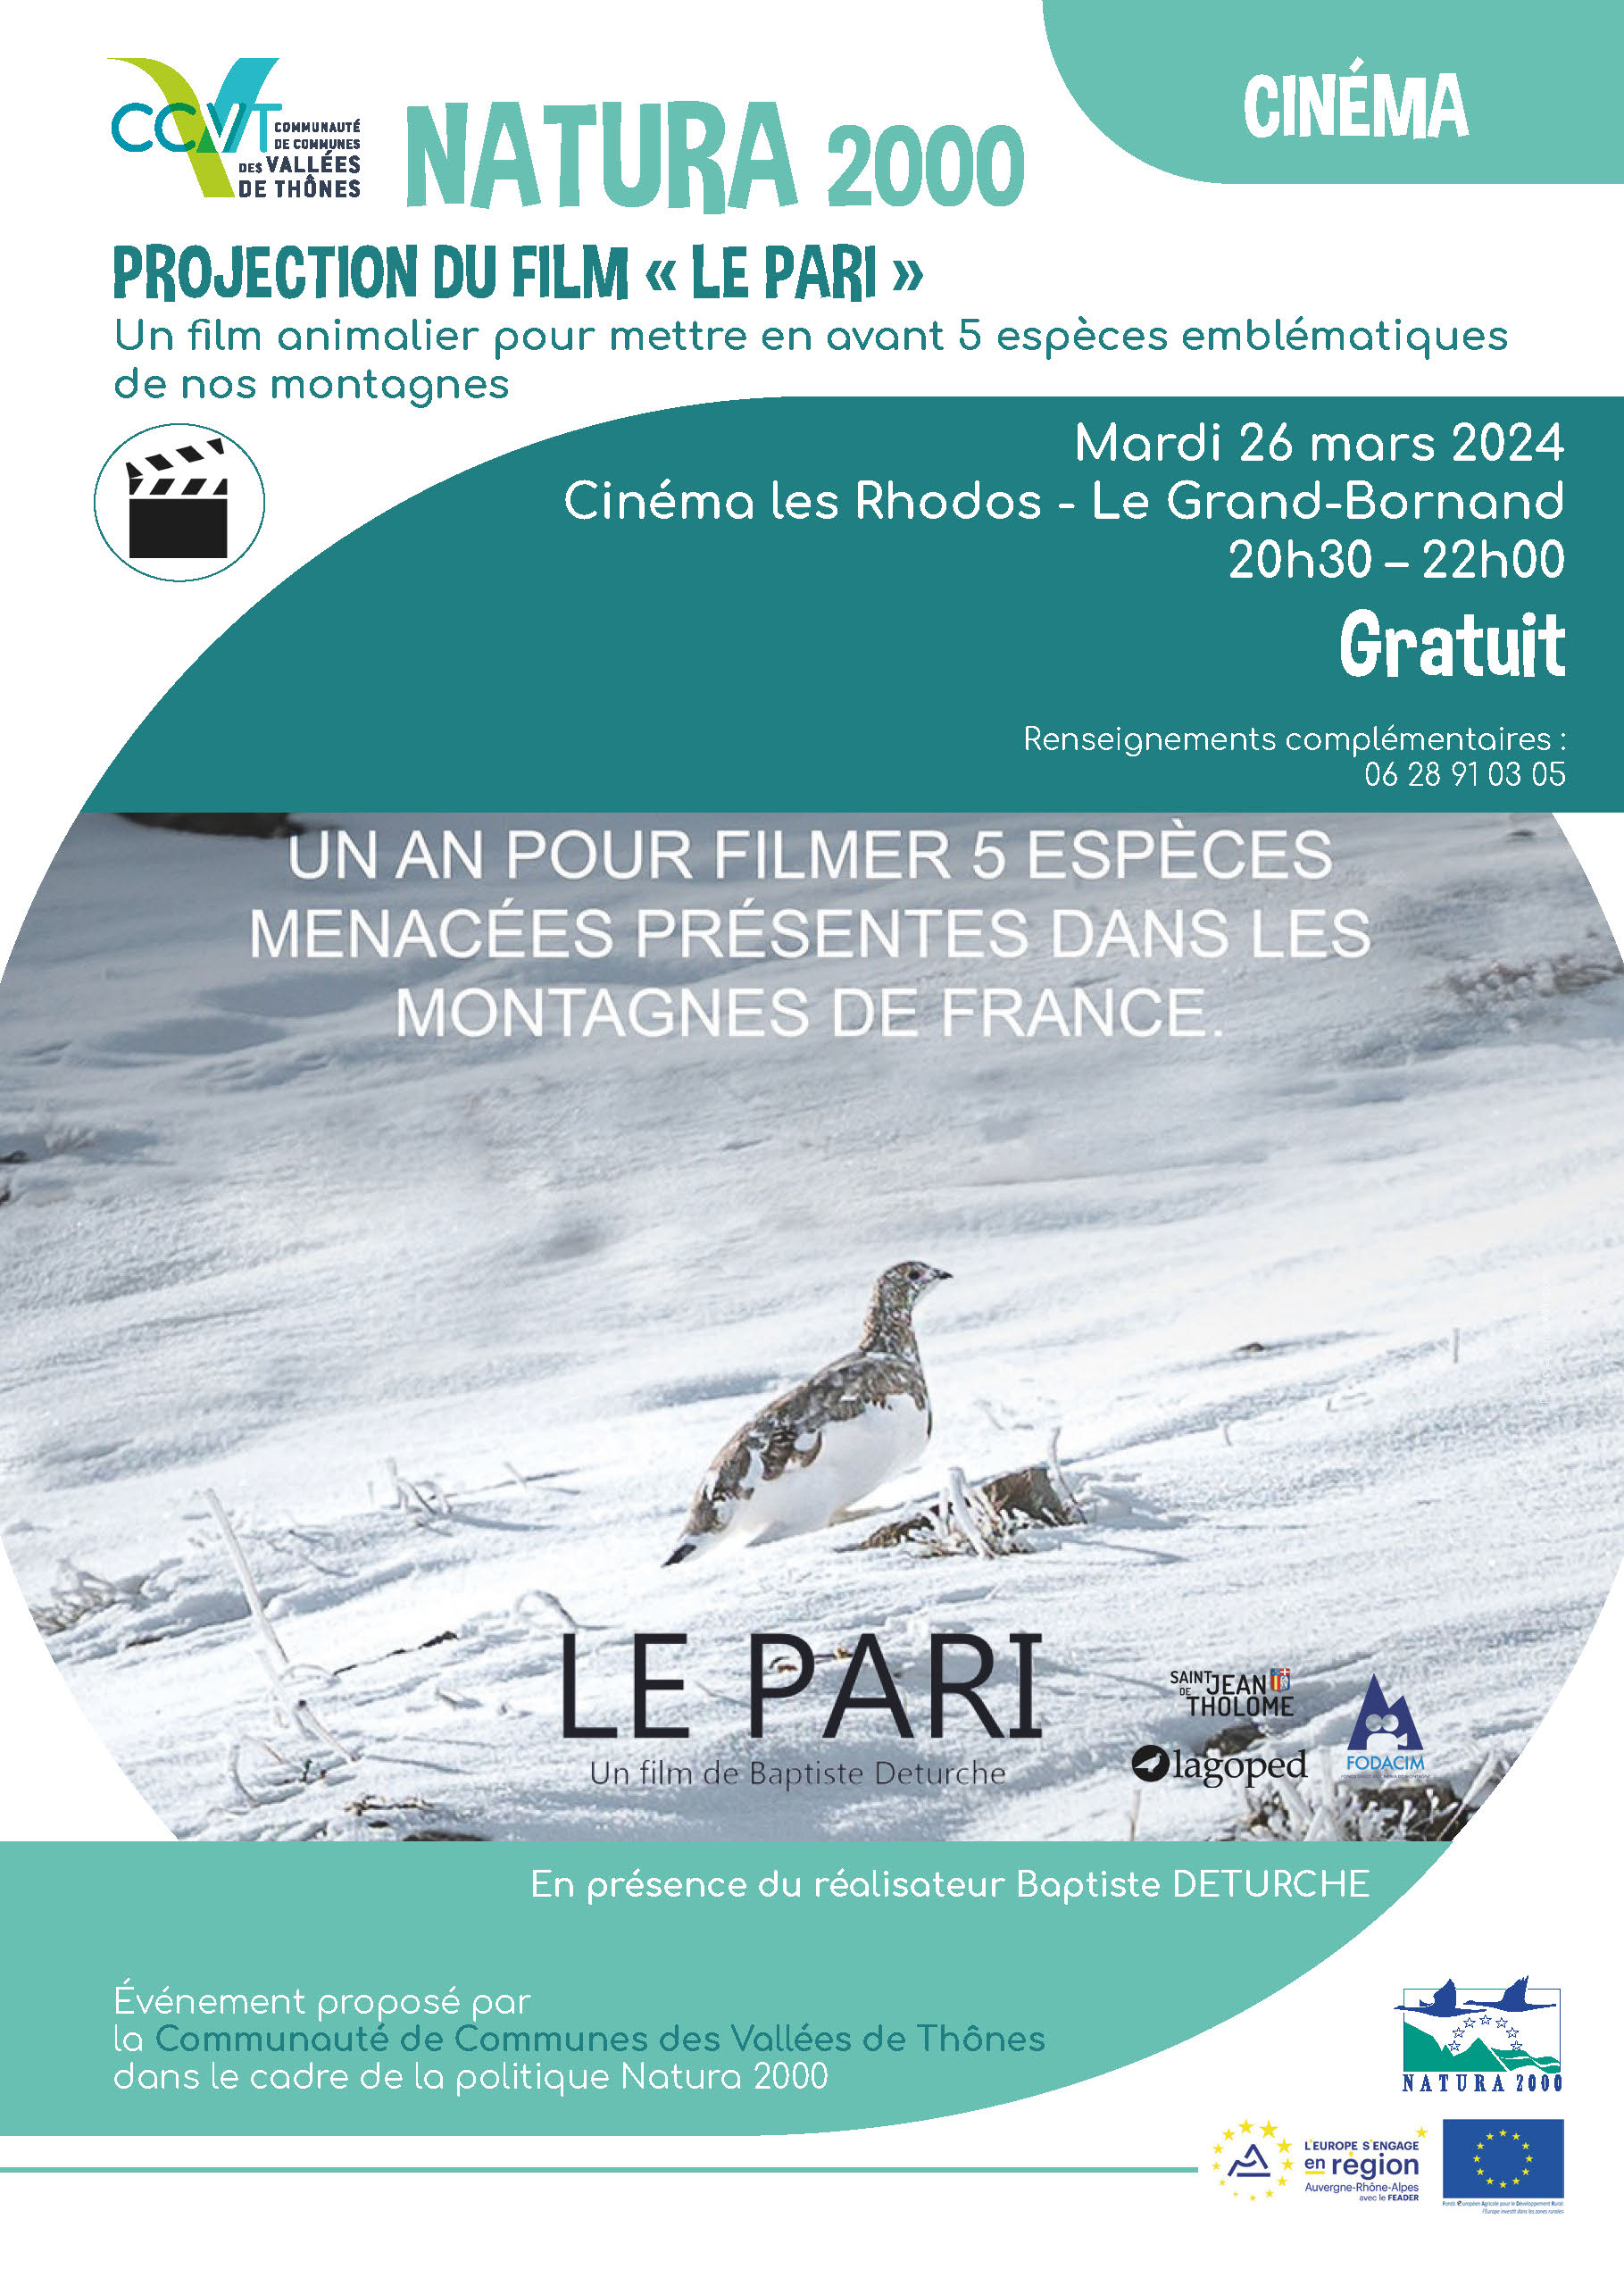 Projection de film "Le Pari" - Natura 2000